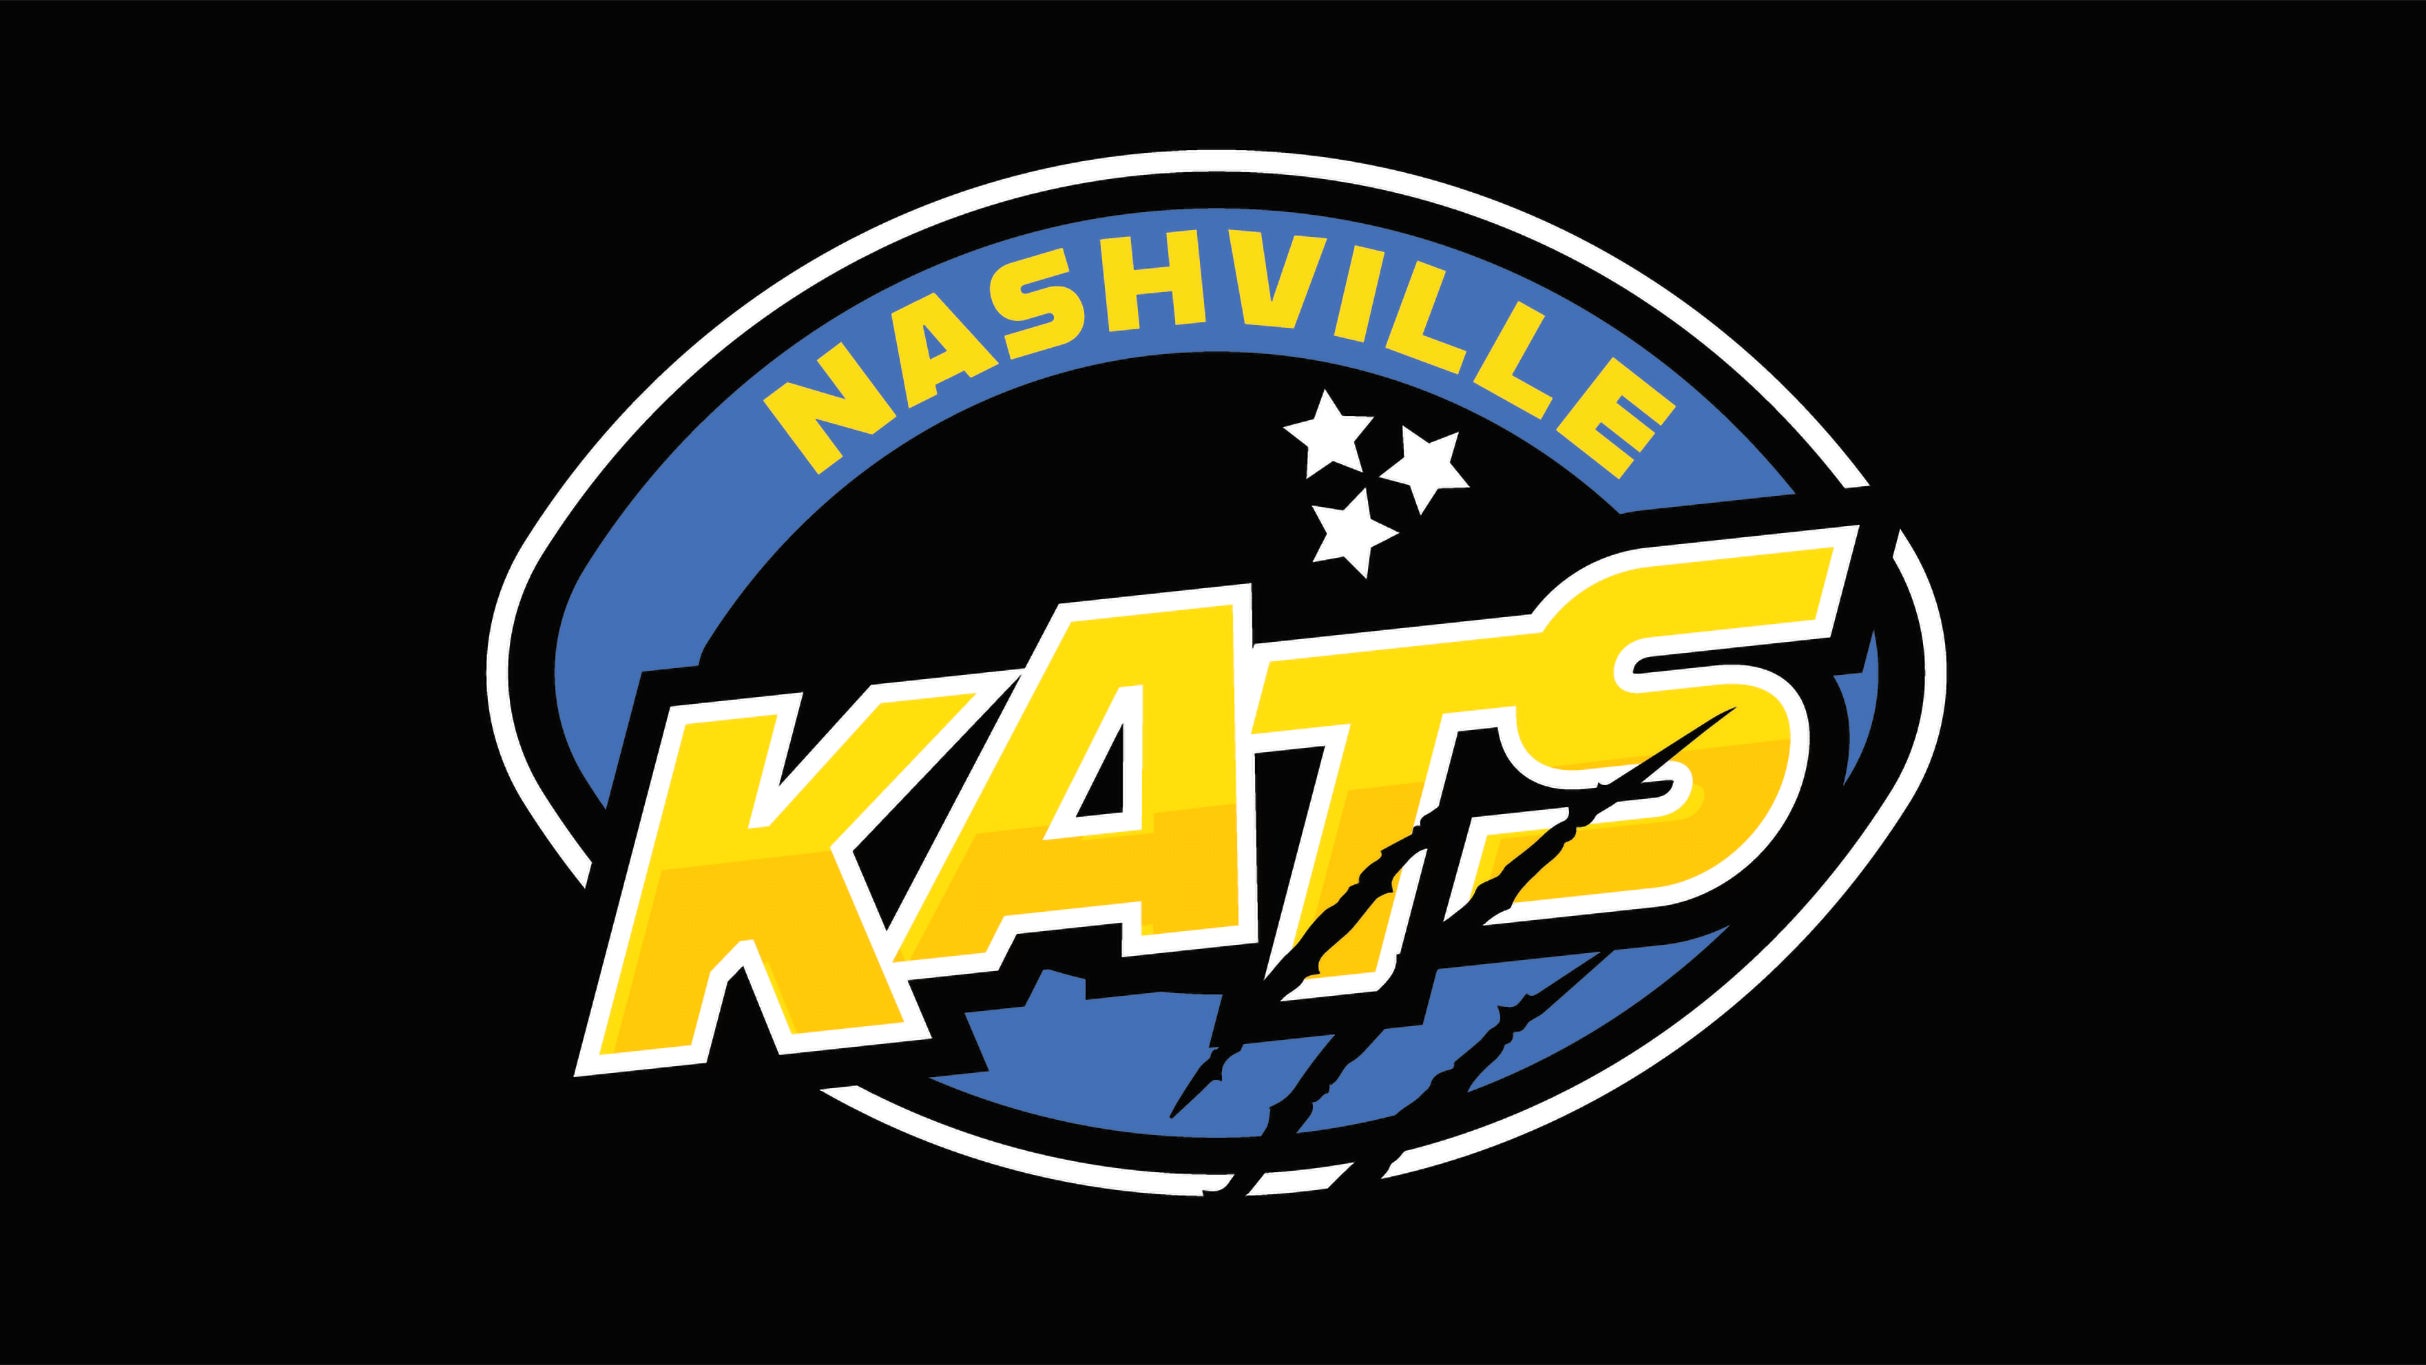 Nashville Kats vs. Georgia Force at F&M Bank Arena